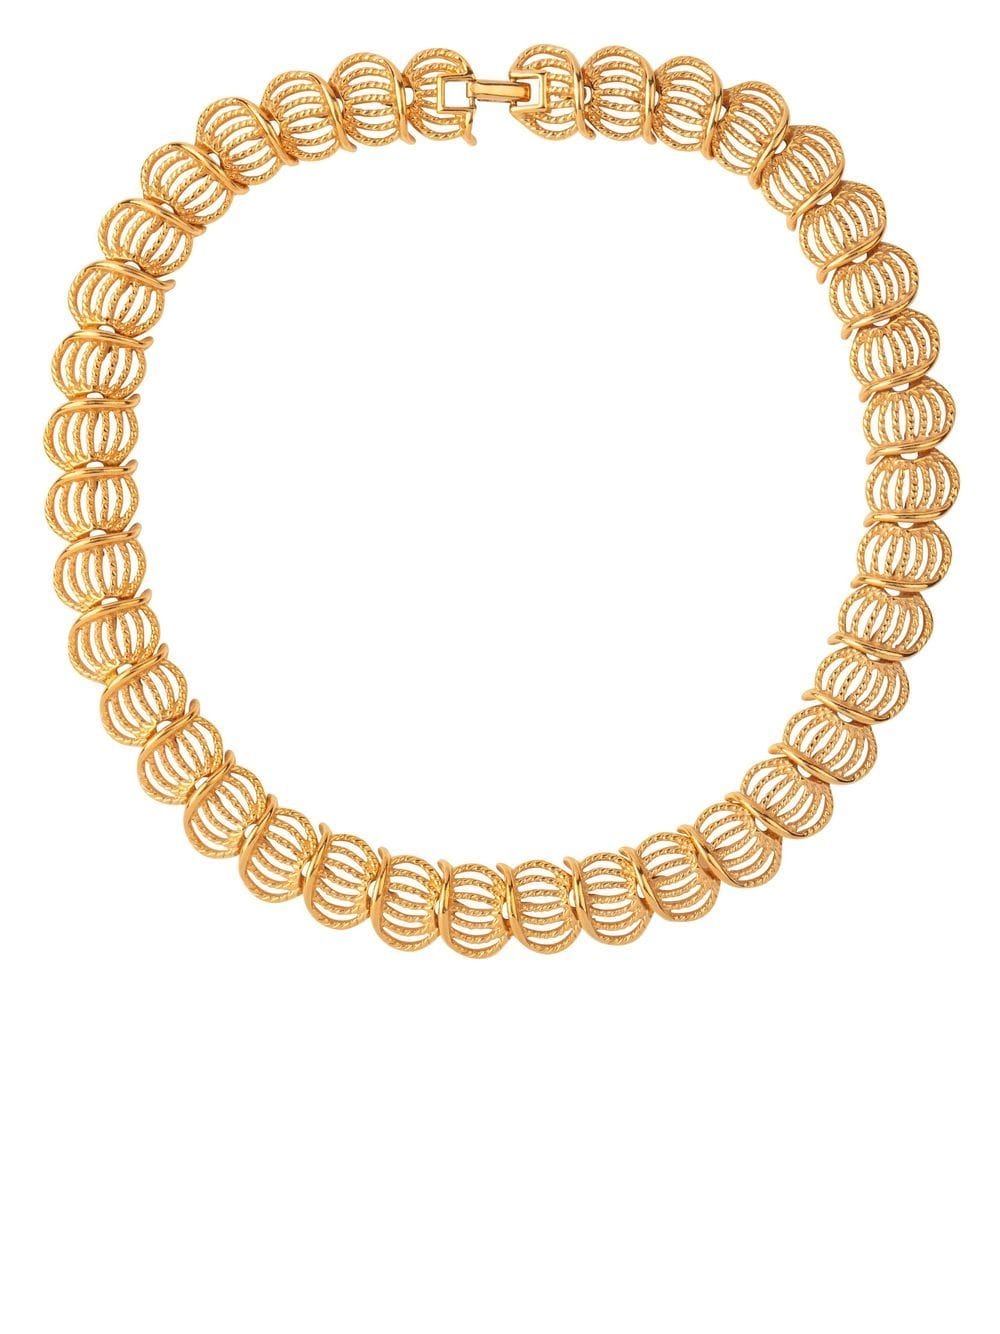 Pre-owned Susan Caplan Vintage 1980s Napier Filigree Links Necklace In Gold